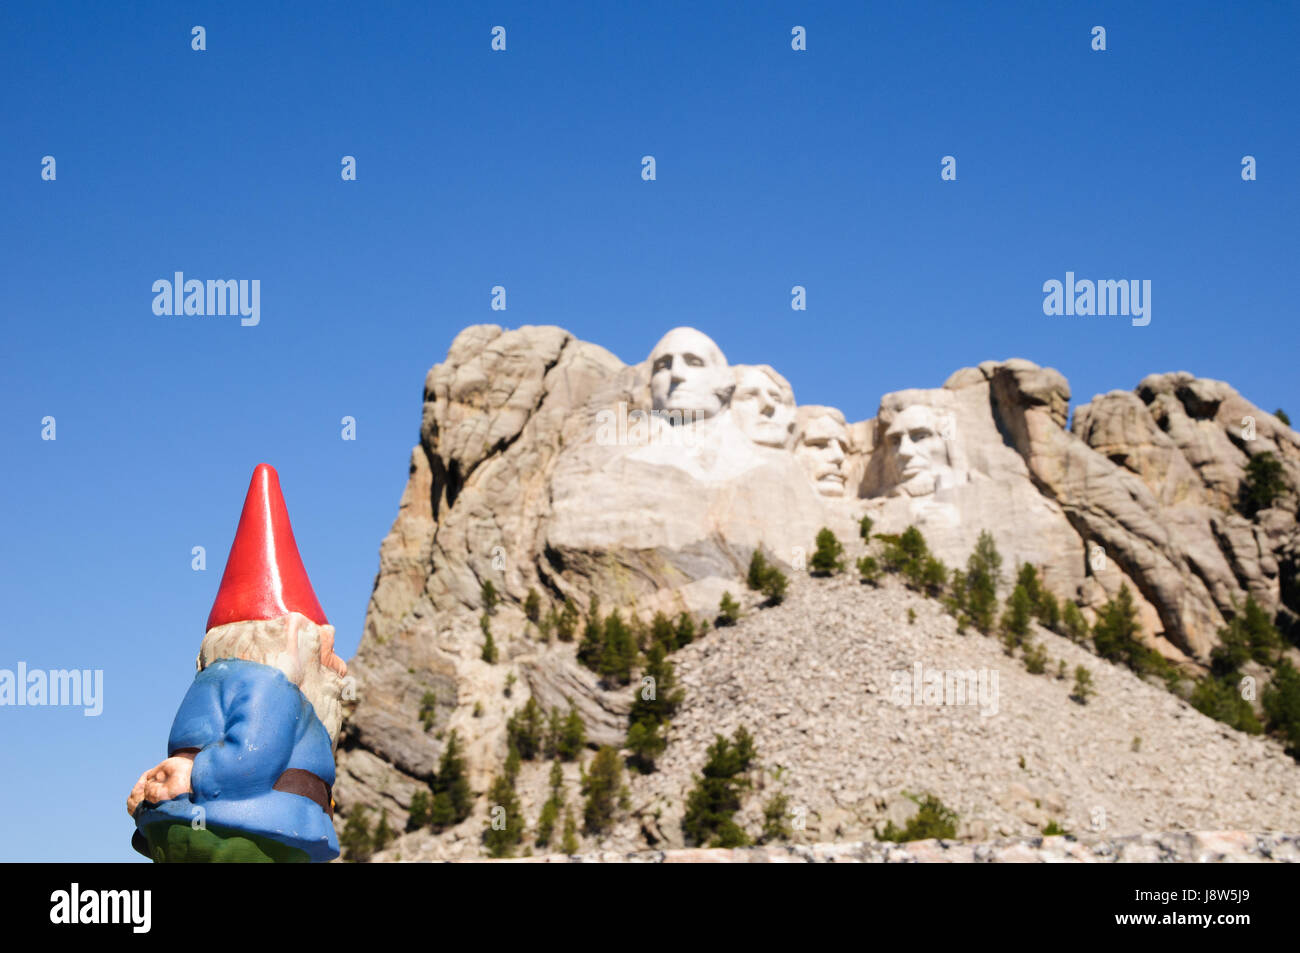 Gnome in foreground of Mount Rushmore National Memorial, Black Hills, Keystone, South Dakota, USA Stock Photo